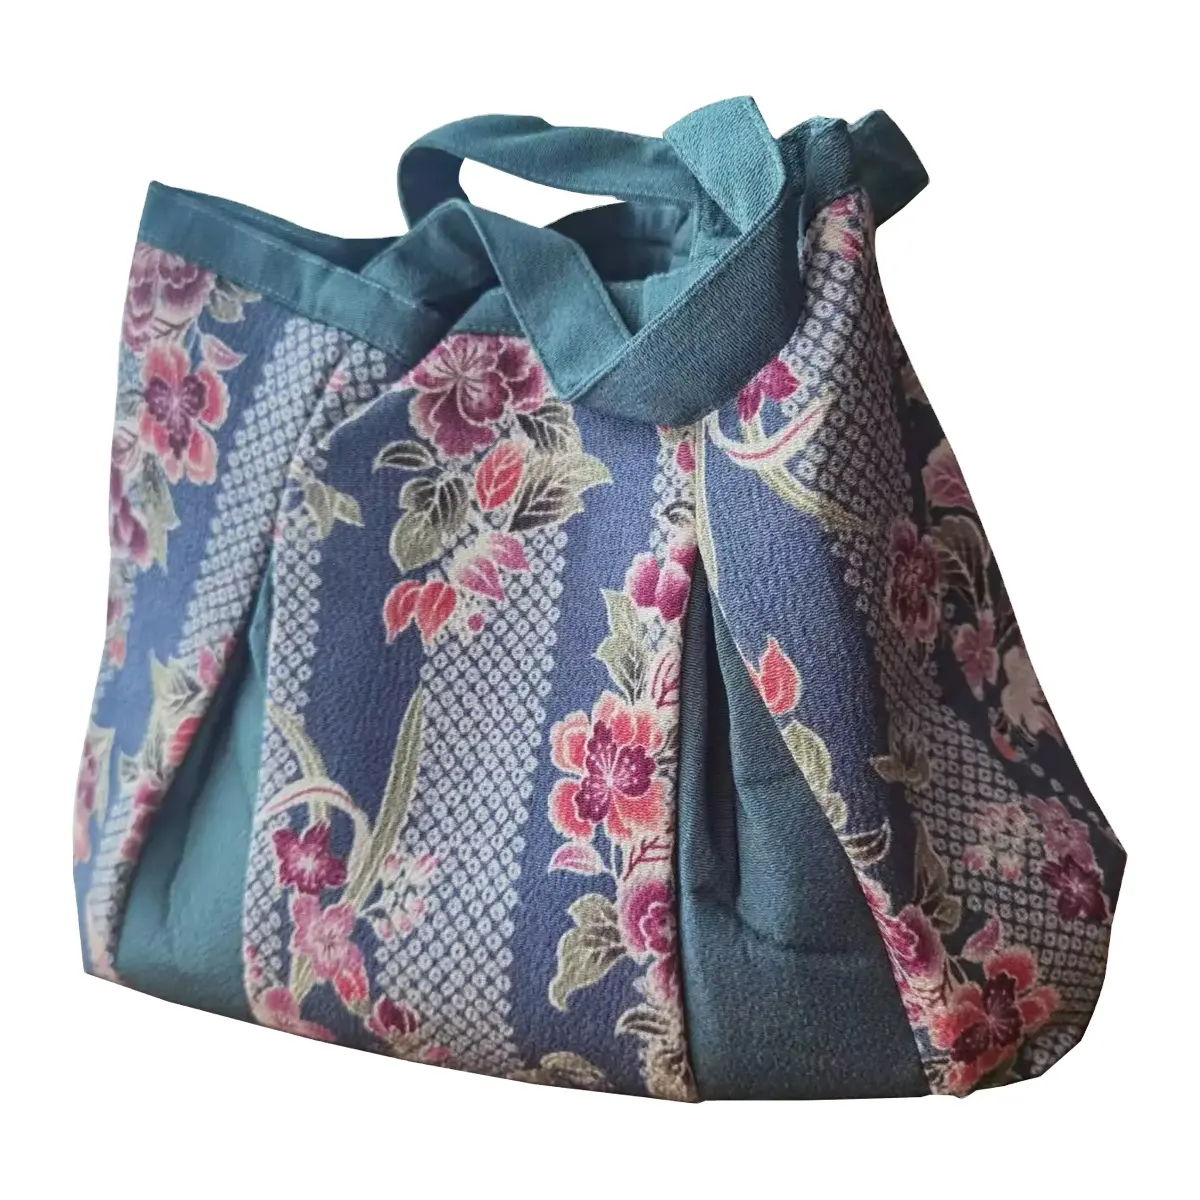 Factory New Style Hot Fashion Casual Women Canvas Handbag Shoulder Bag Satchel